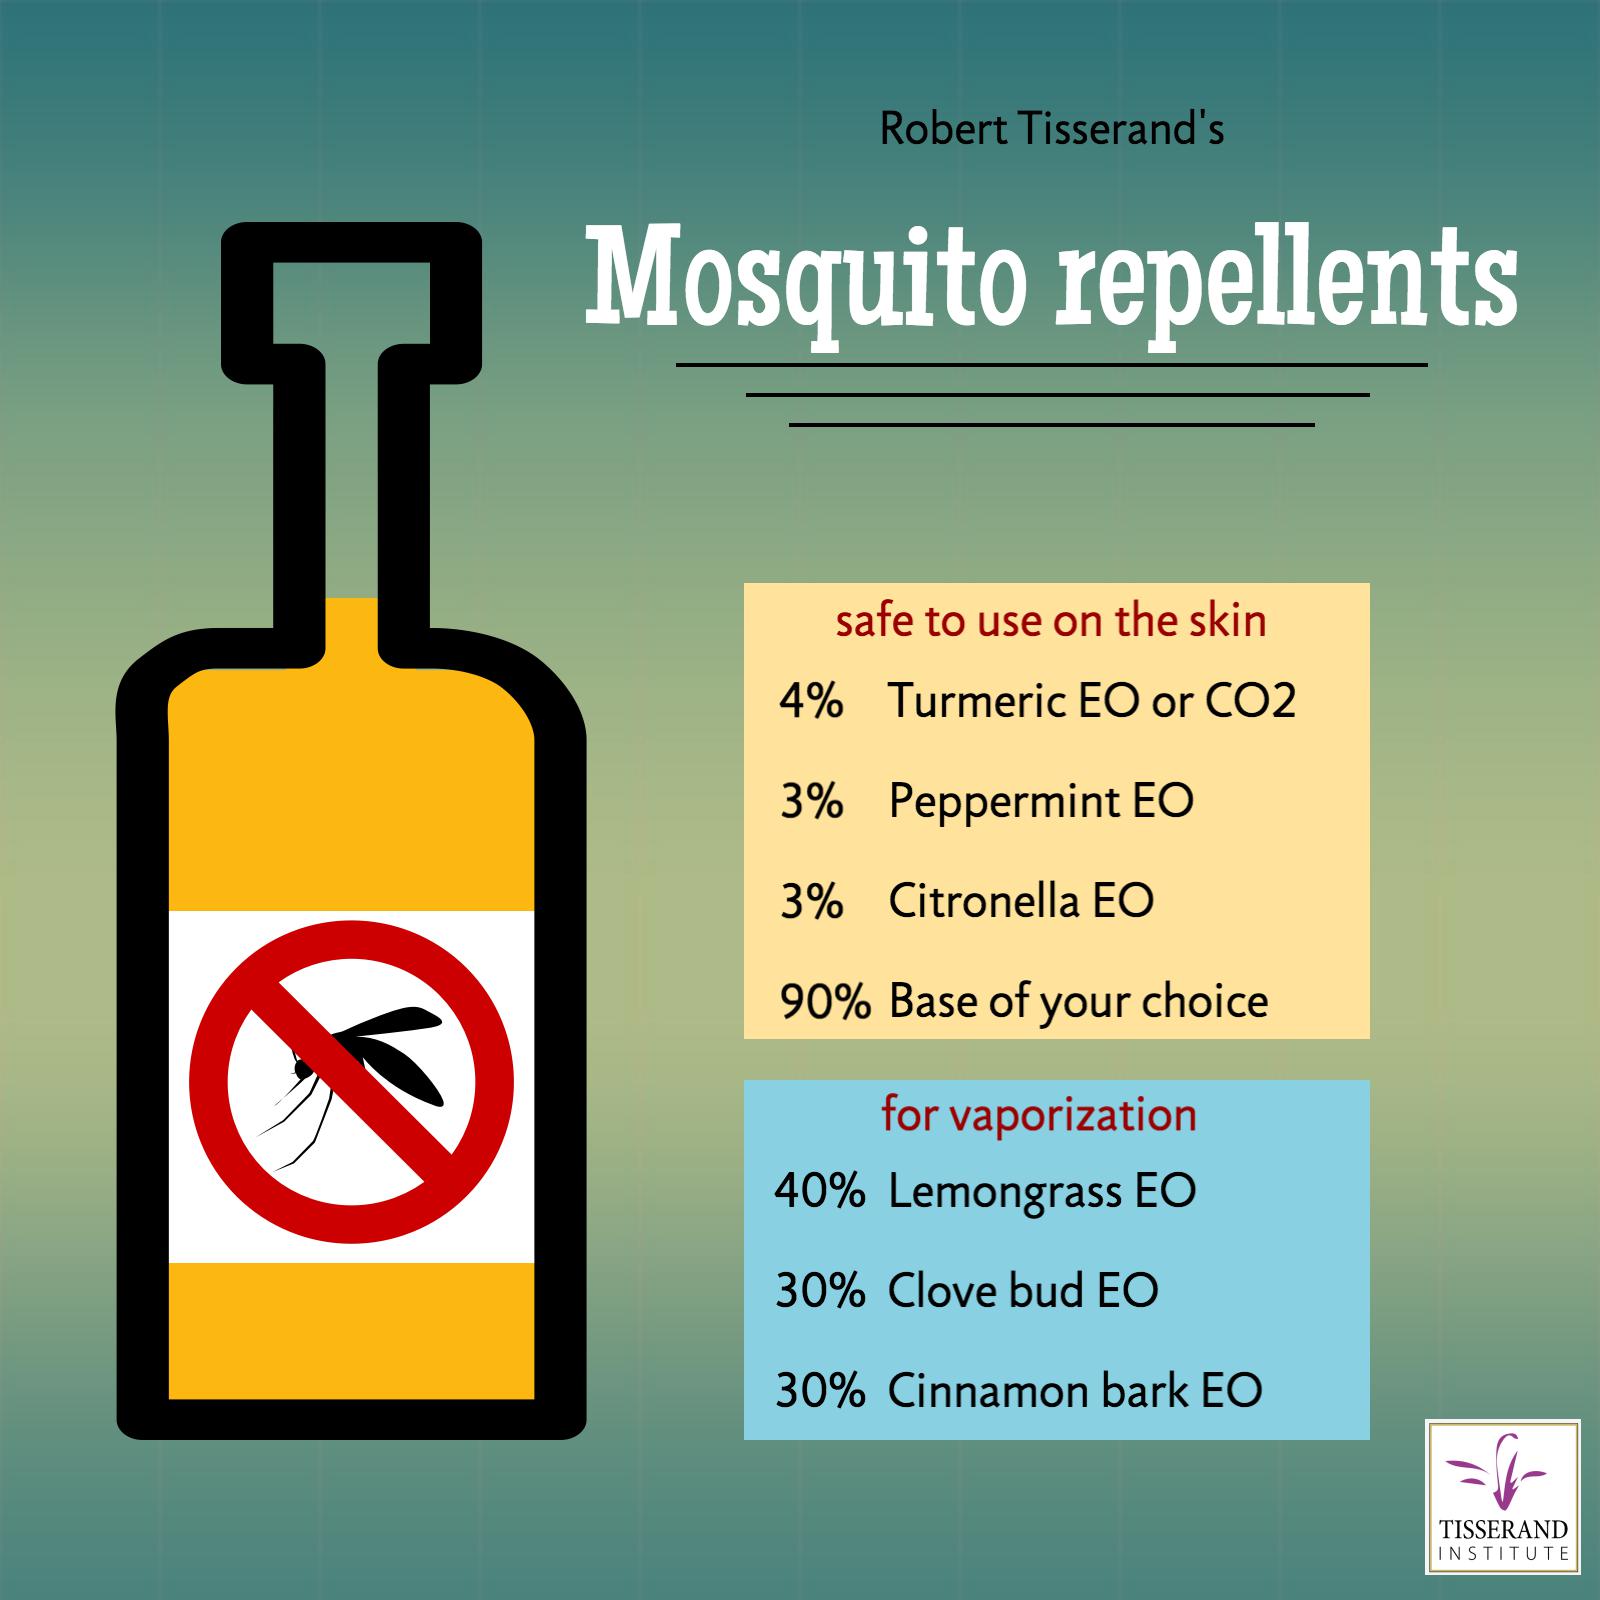 Robert Tisserand's Mosquito Repellents | Tisserand Institute Infographic #Tisserand #TisserandInstitute #Infographic #EssentialOils #information #study #research #safety #roberttisserand #mosquito #mosquitos #repellent #mosquitorepellent